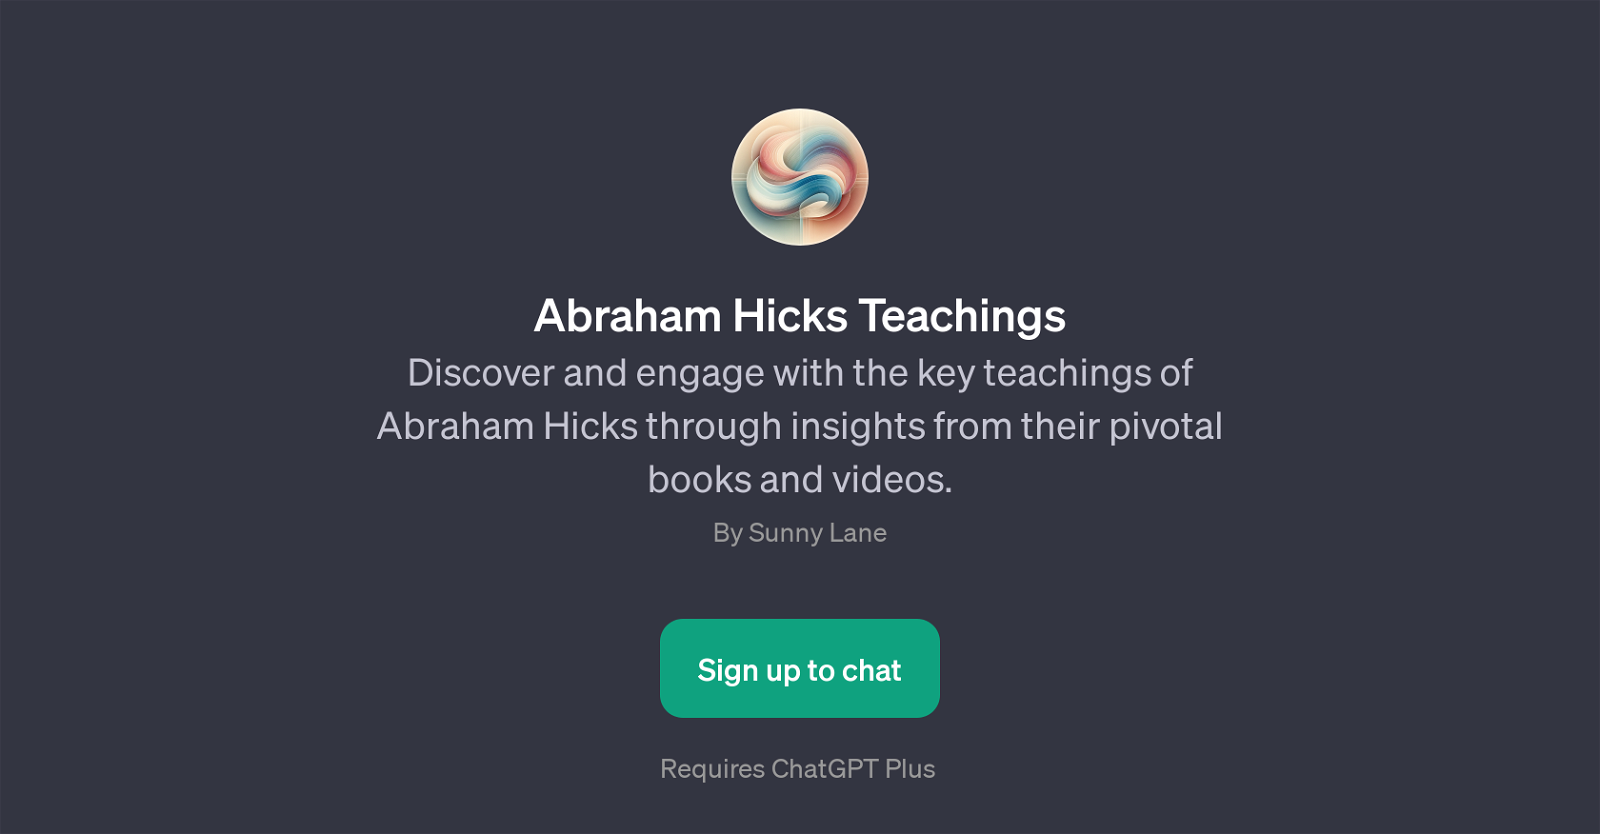 Abraham Hicks Teachings website